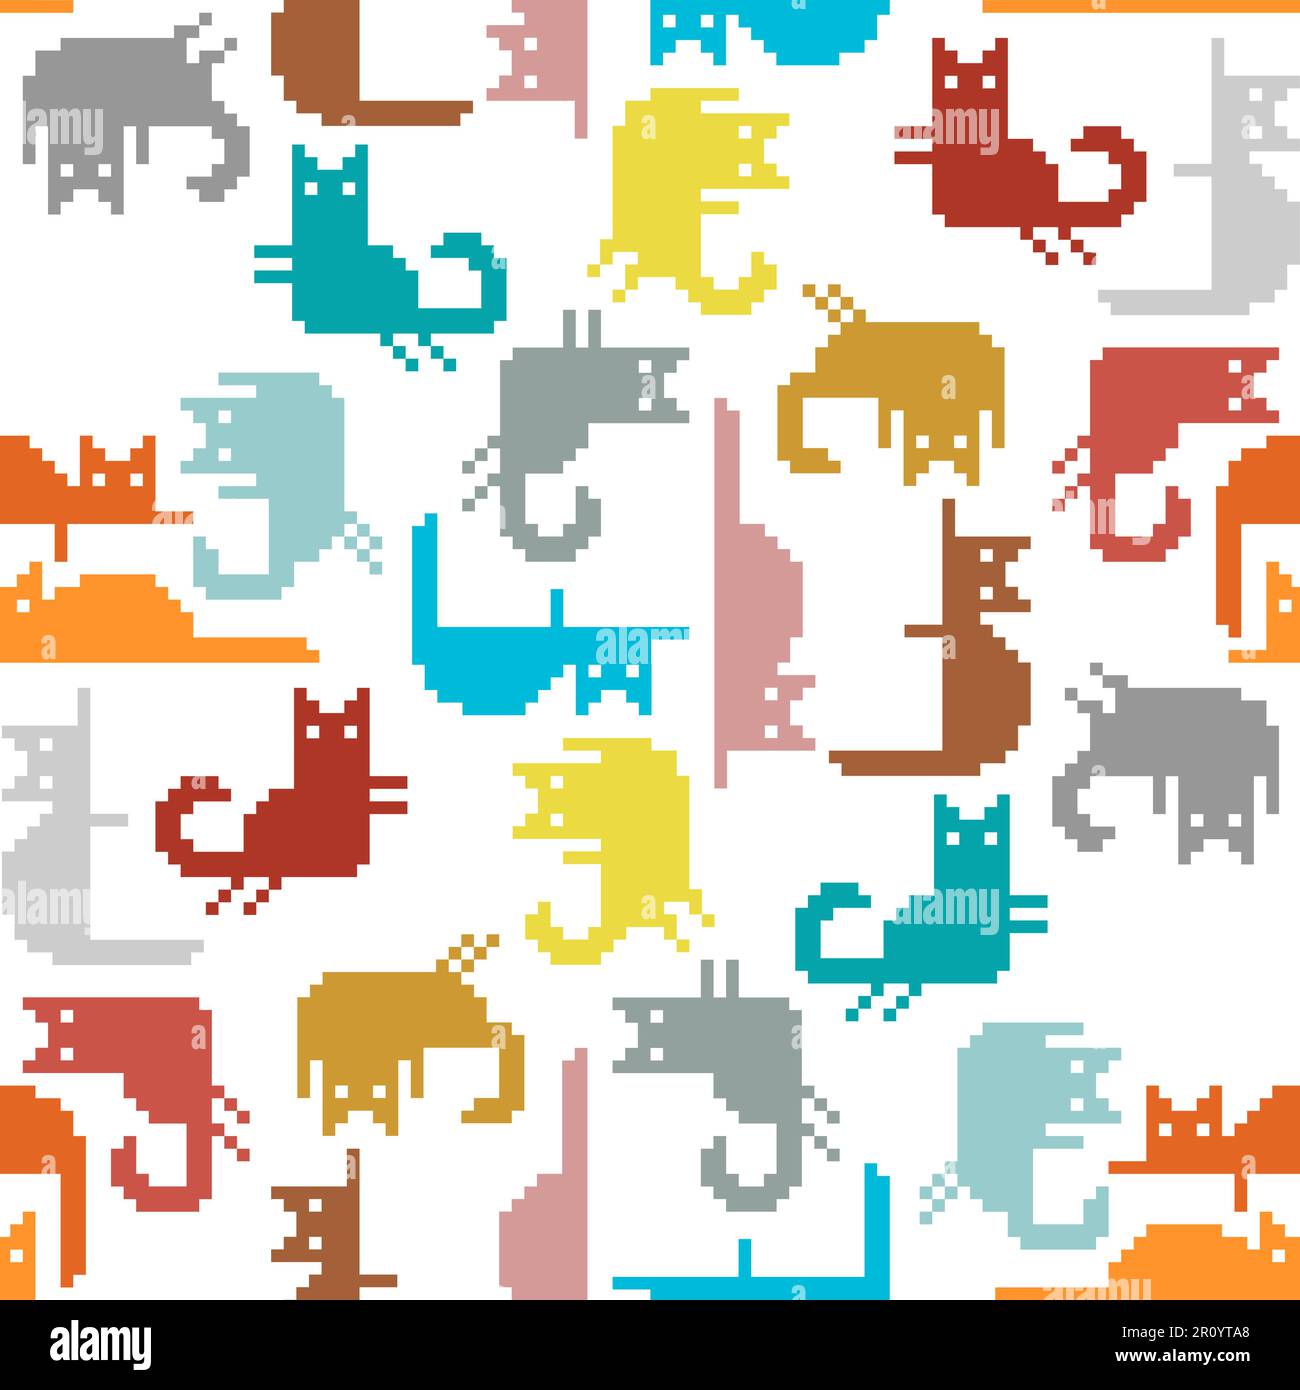 Cat pixel art pattern seamless. 8 bit pat background. pixelated Baby fabric texture Stock Vector